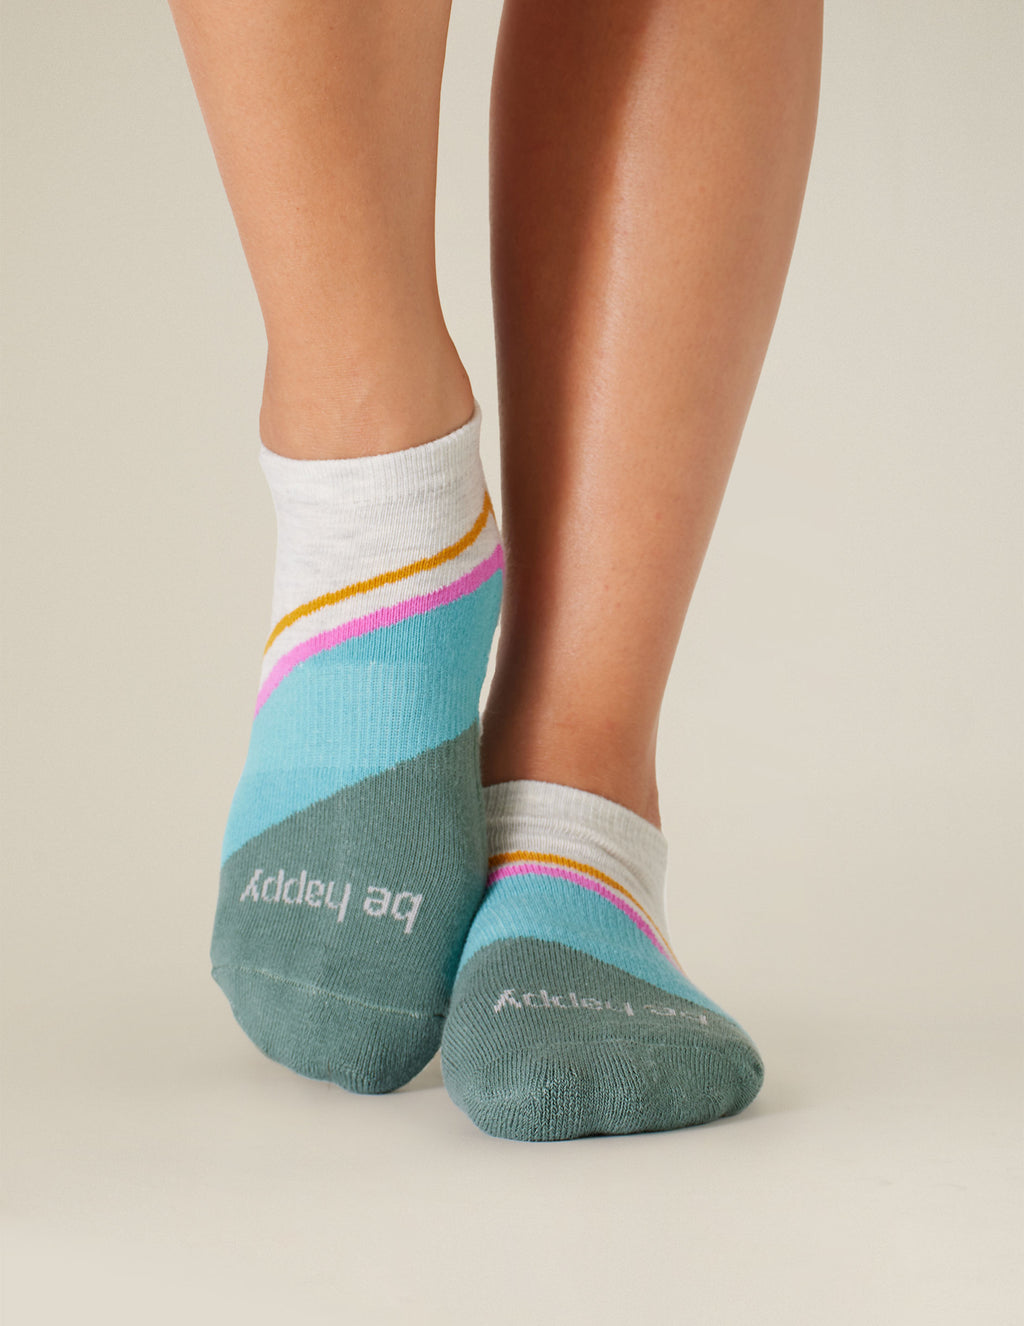 Sticky Be Grateful Grip Socks